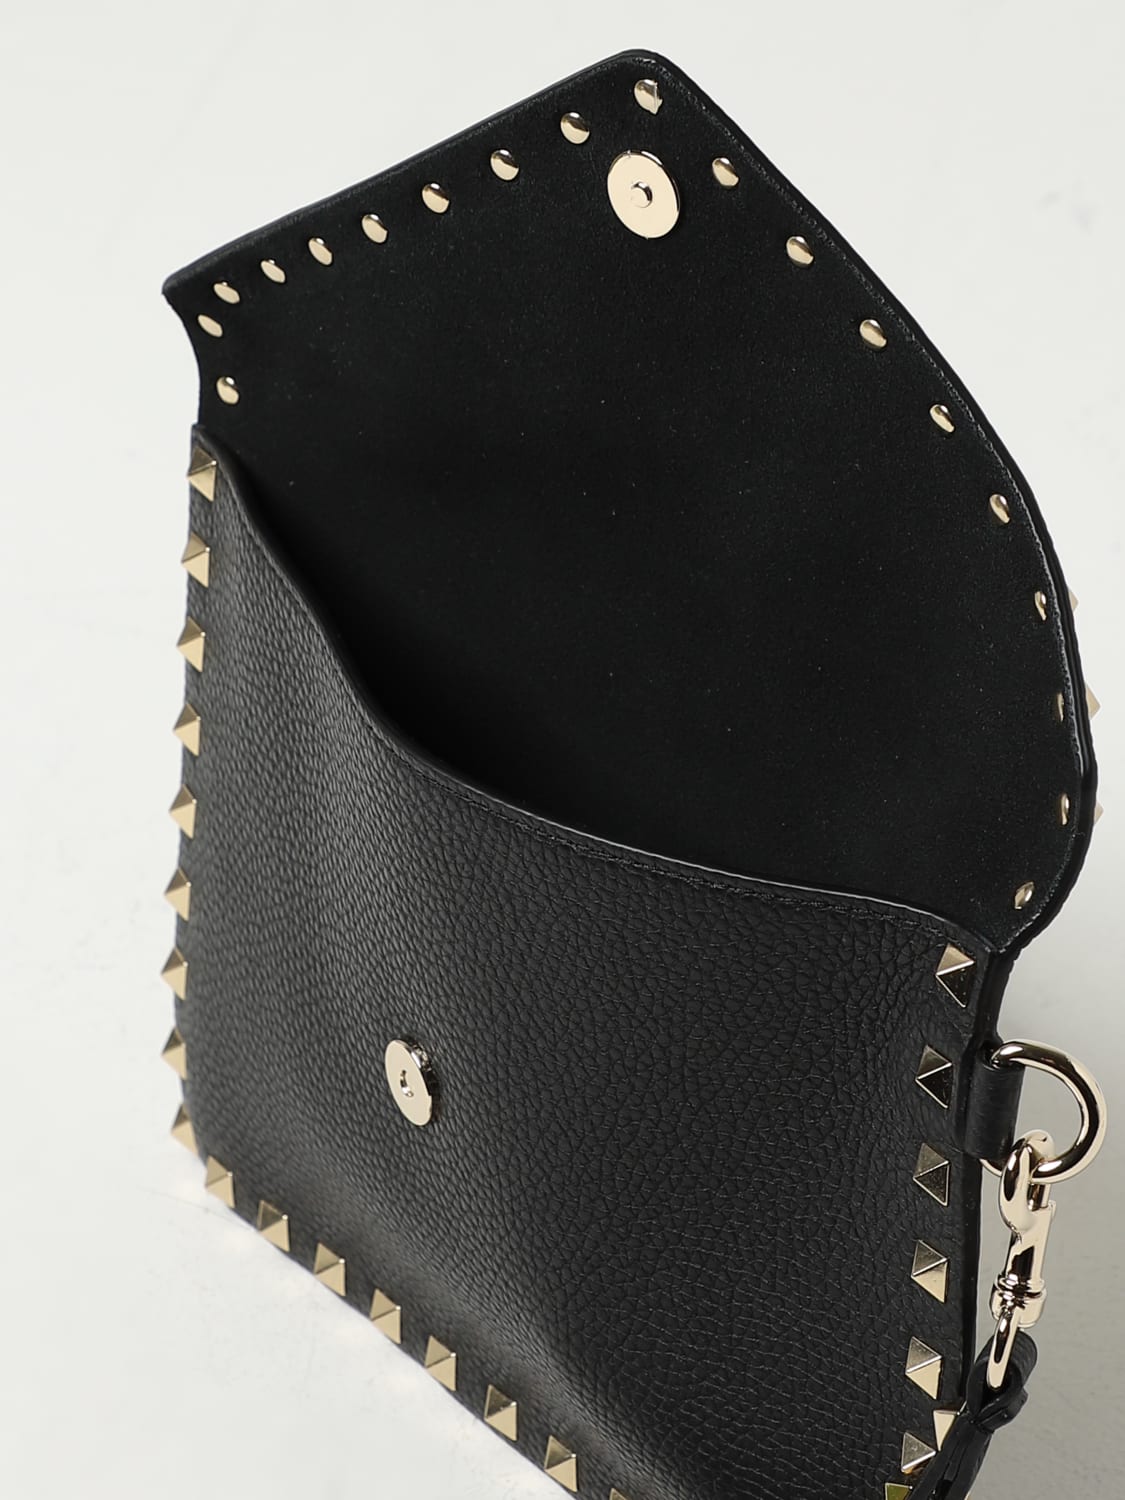 Valentino Garavani Mini Rockstud Leather Clutch Bag, Rose Quartz, Women's, Clutches & Small Handbags Clutches Pouches & Wristlets